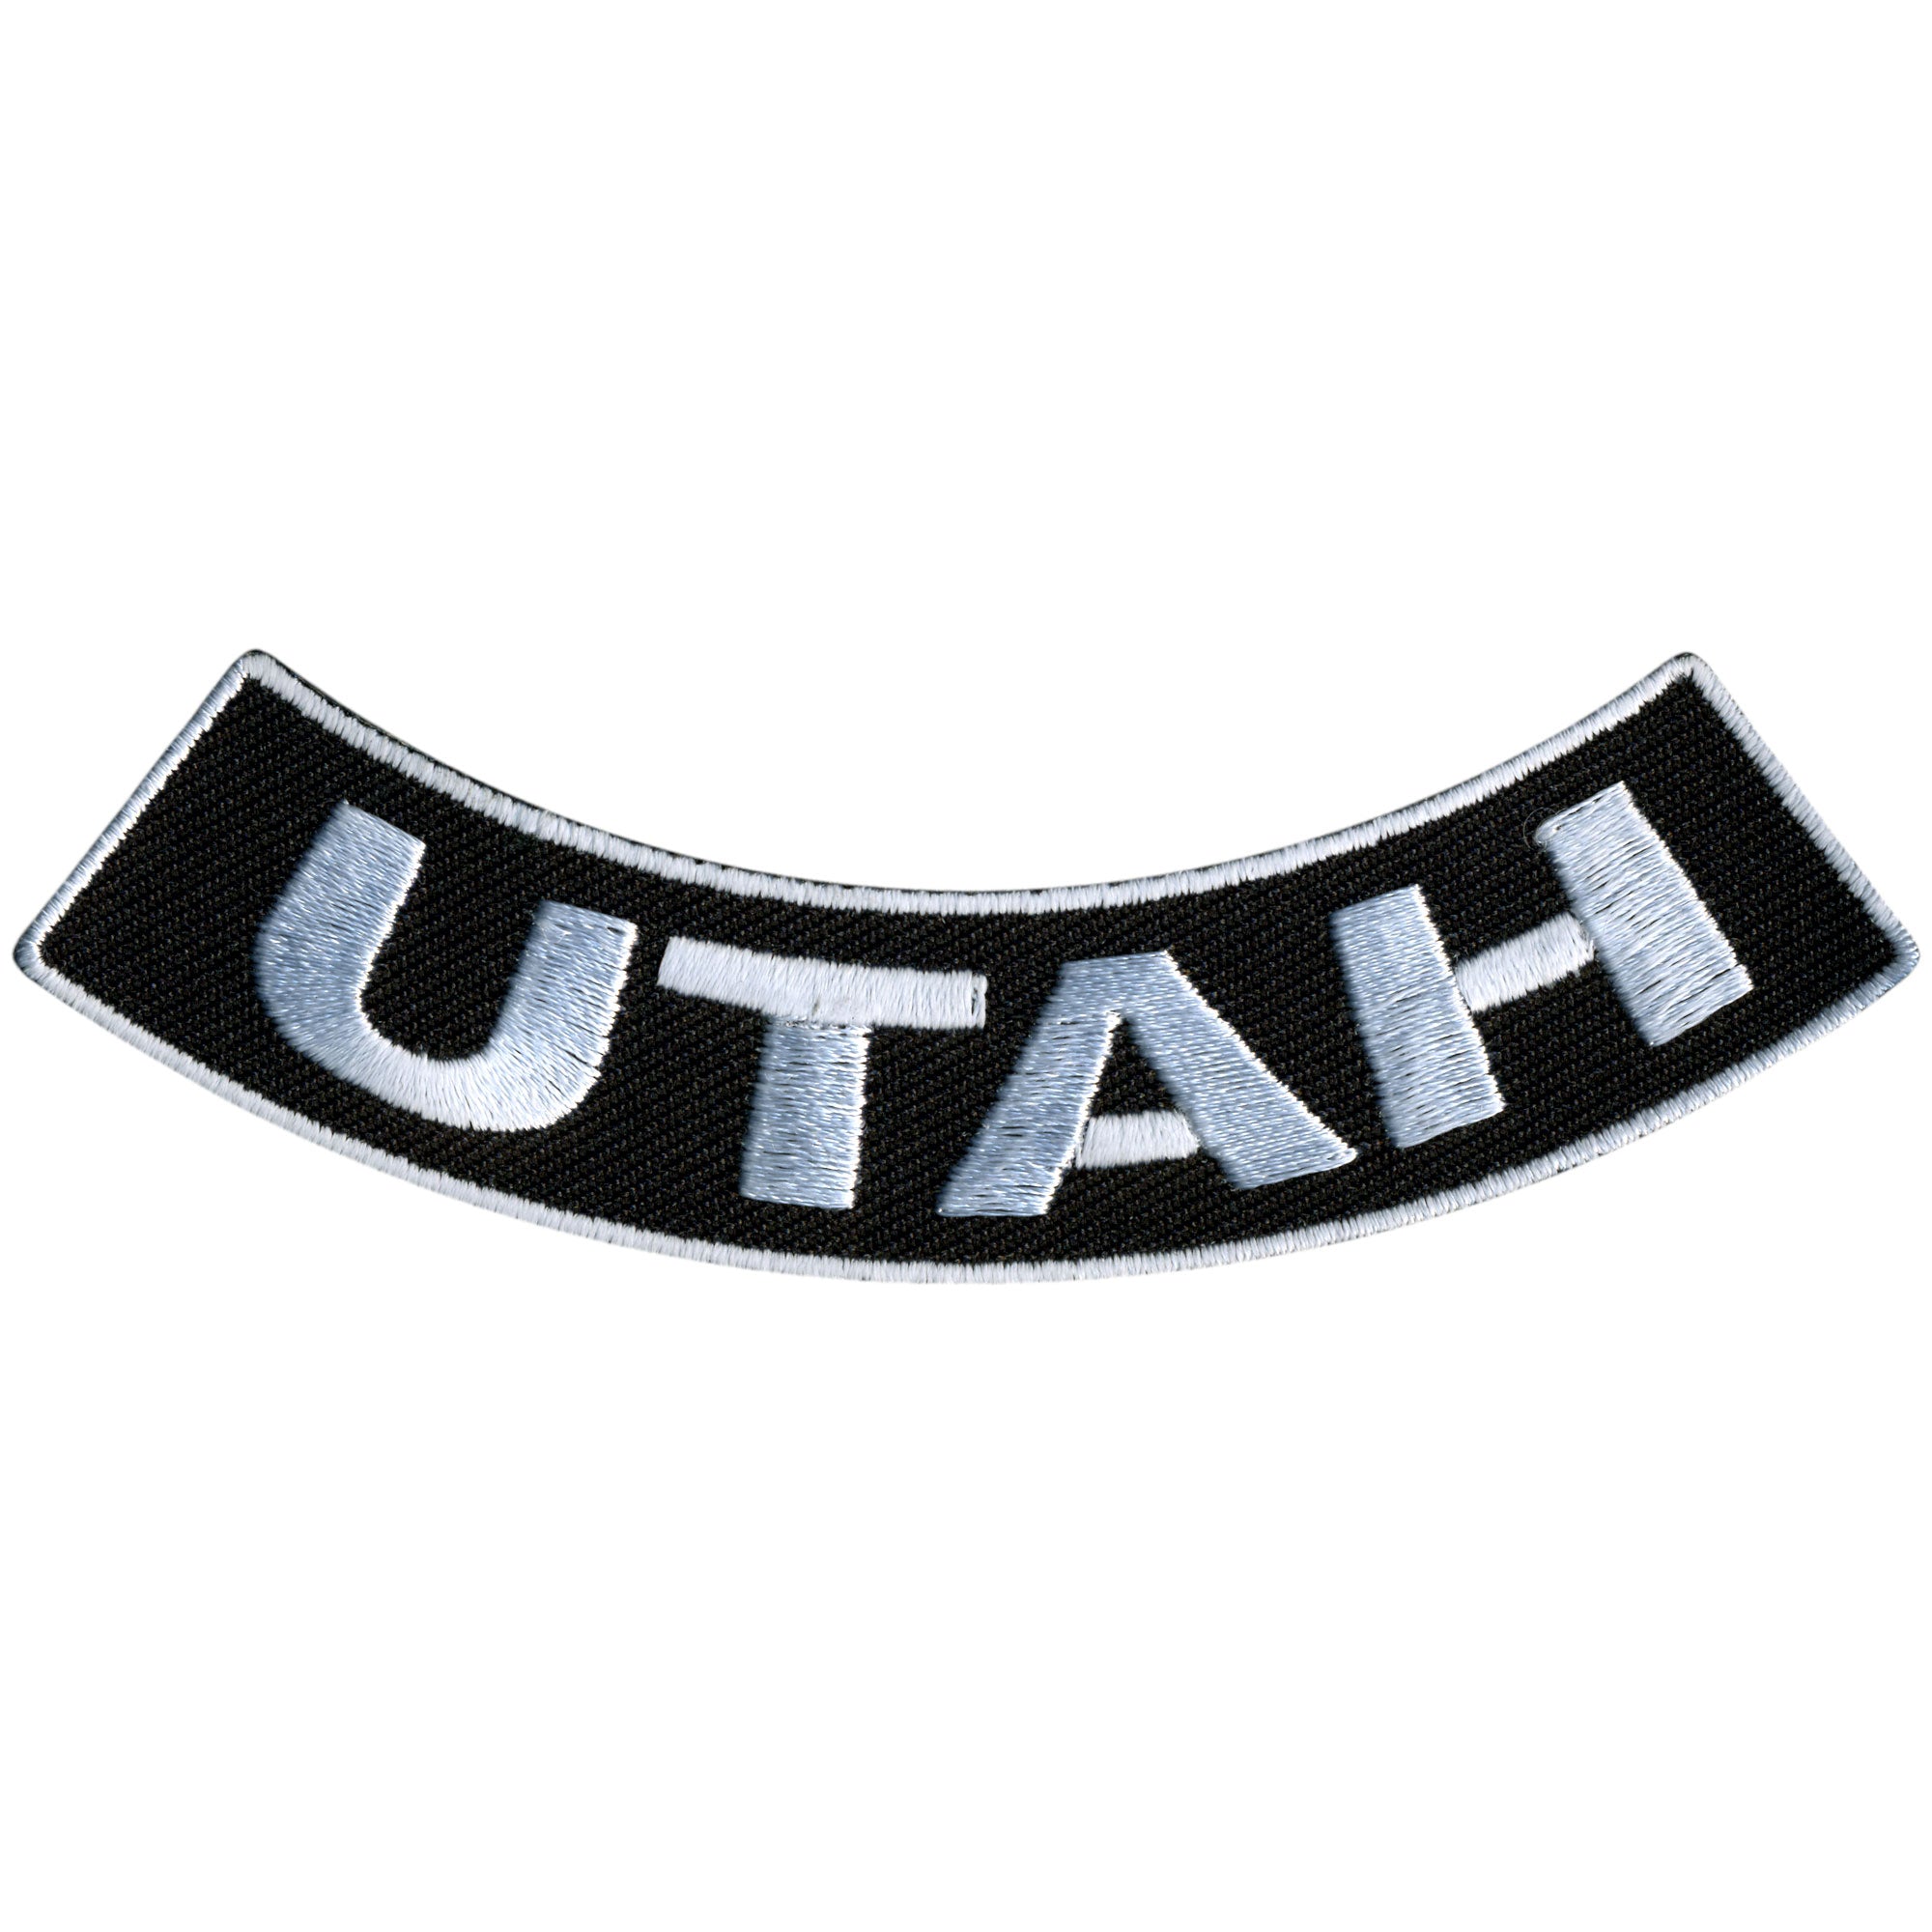 Hot Leathers Utah 4” X 1” Bottom Rocker Patch